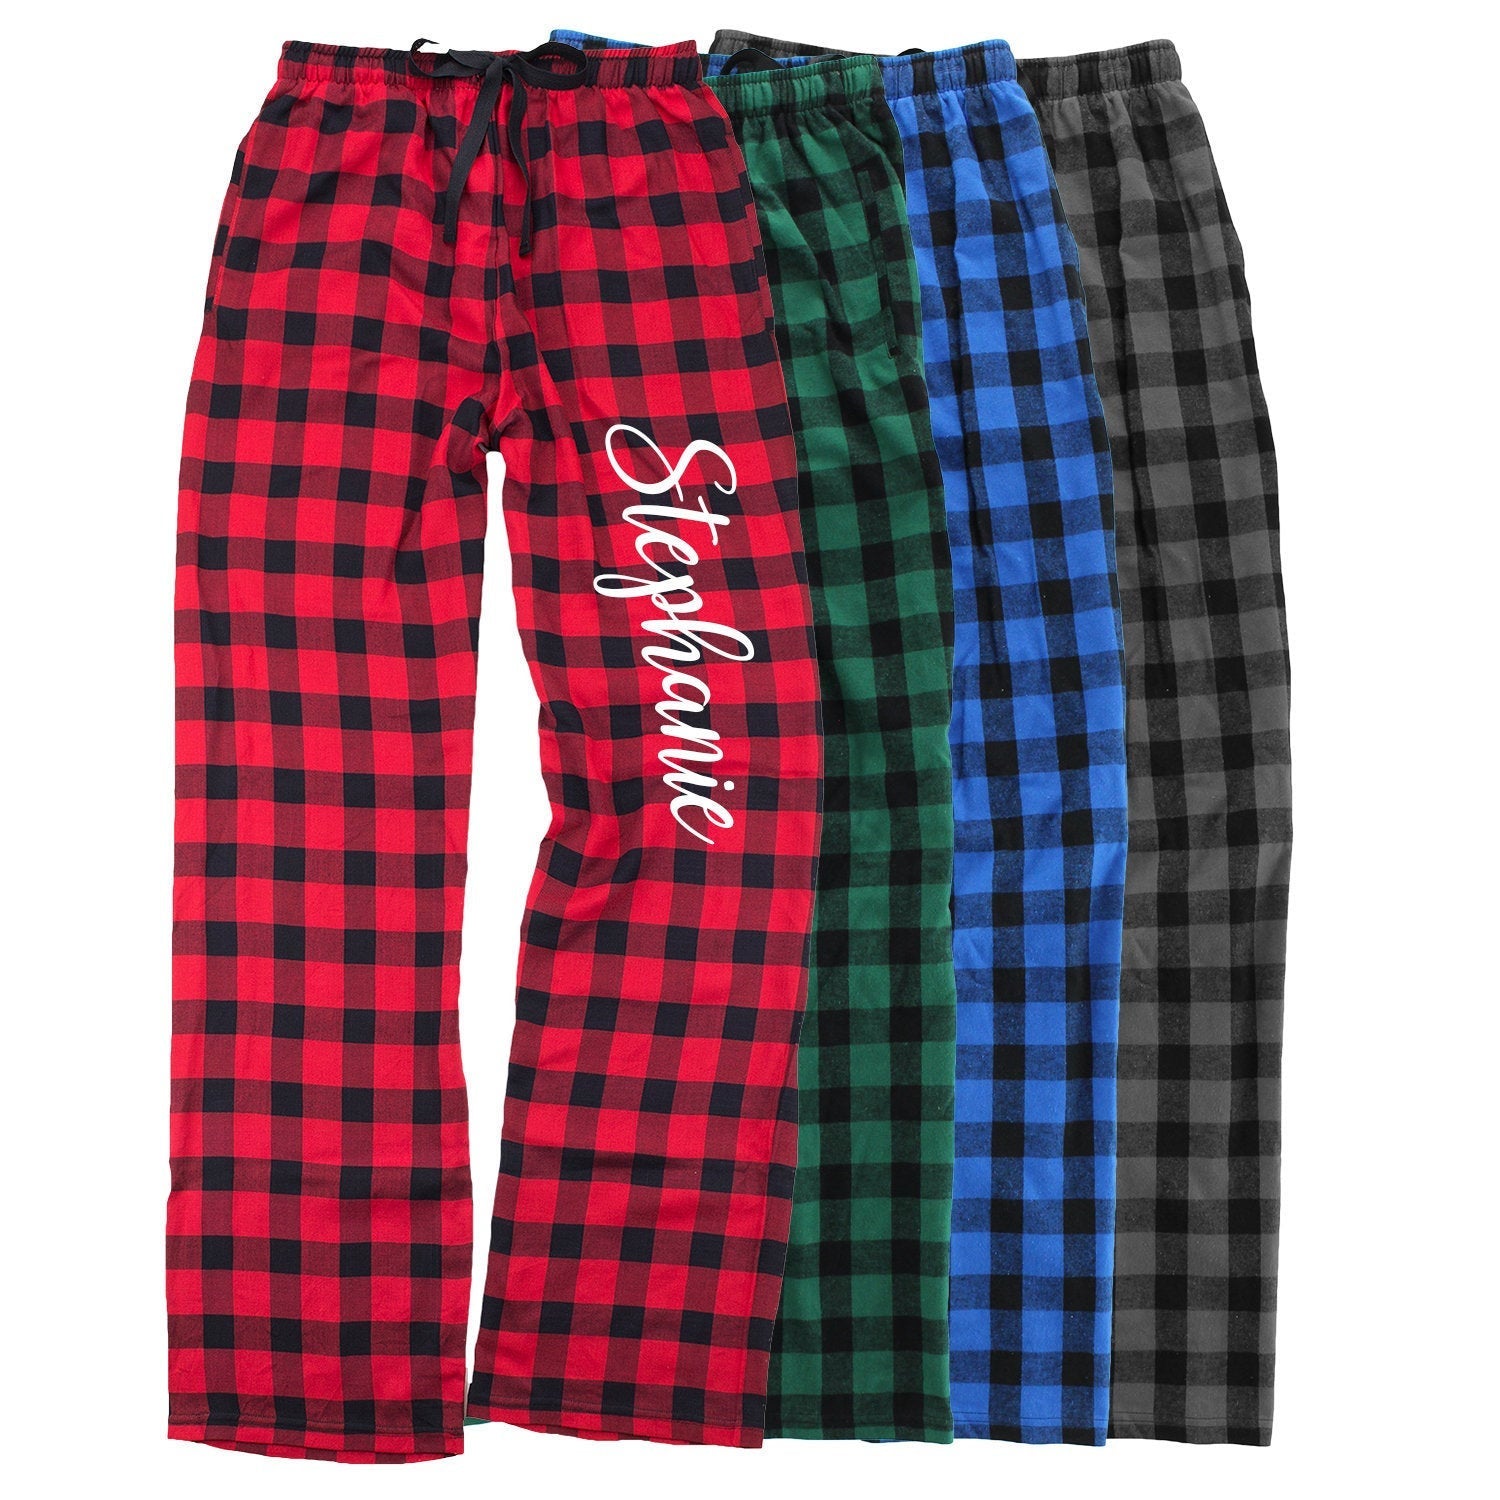 Personalized Flannel Pajama Pants - Plaid